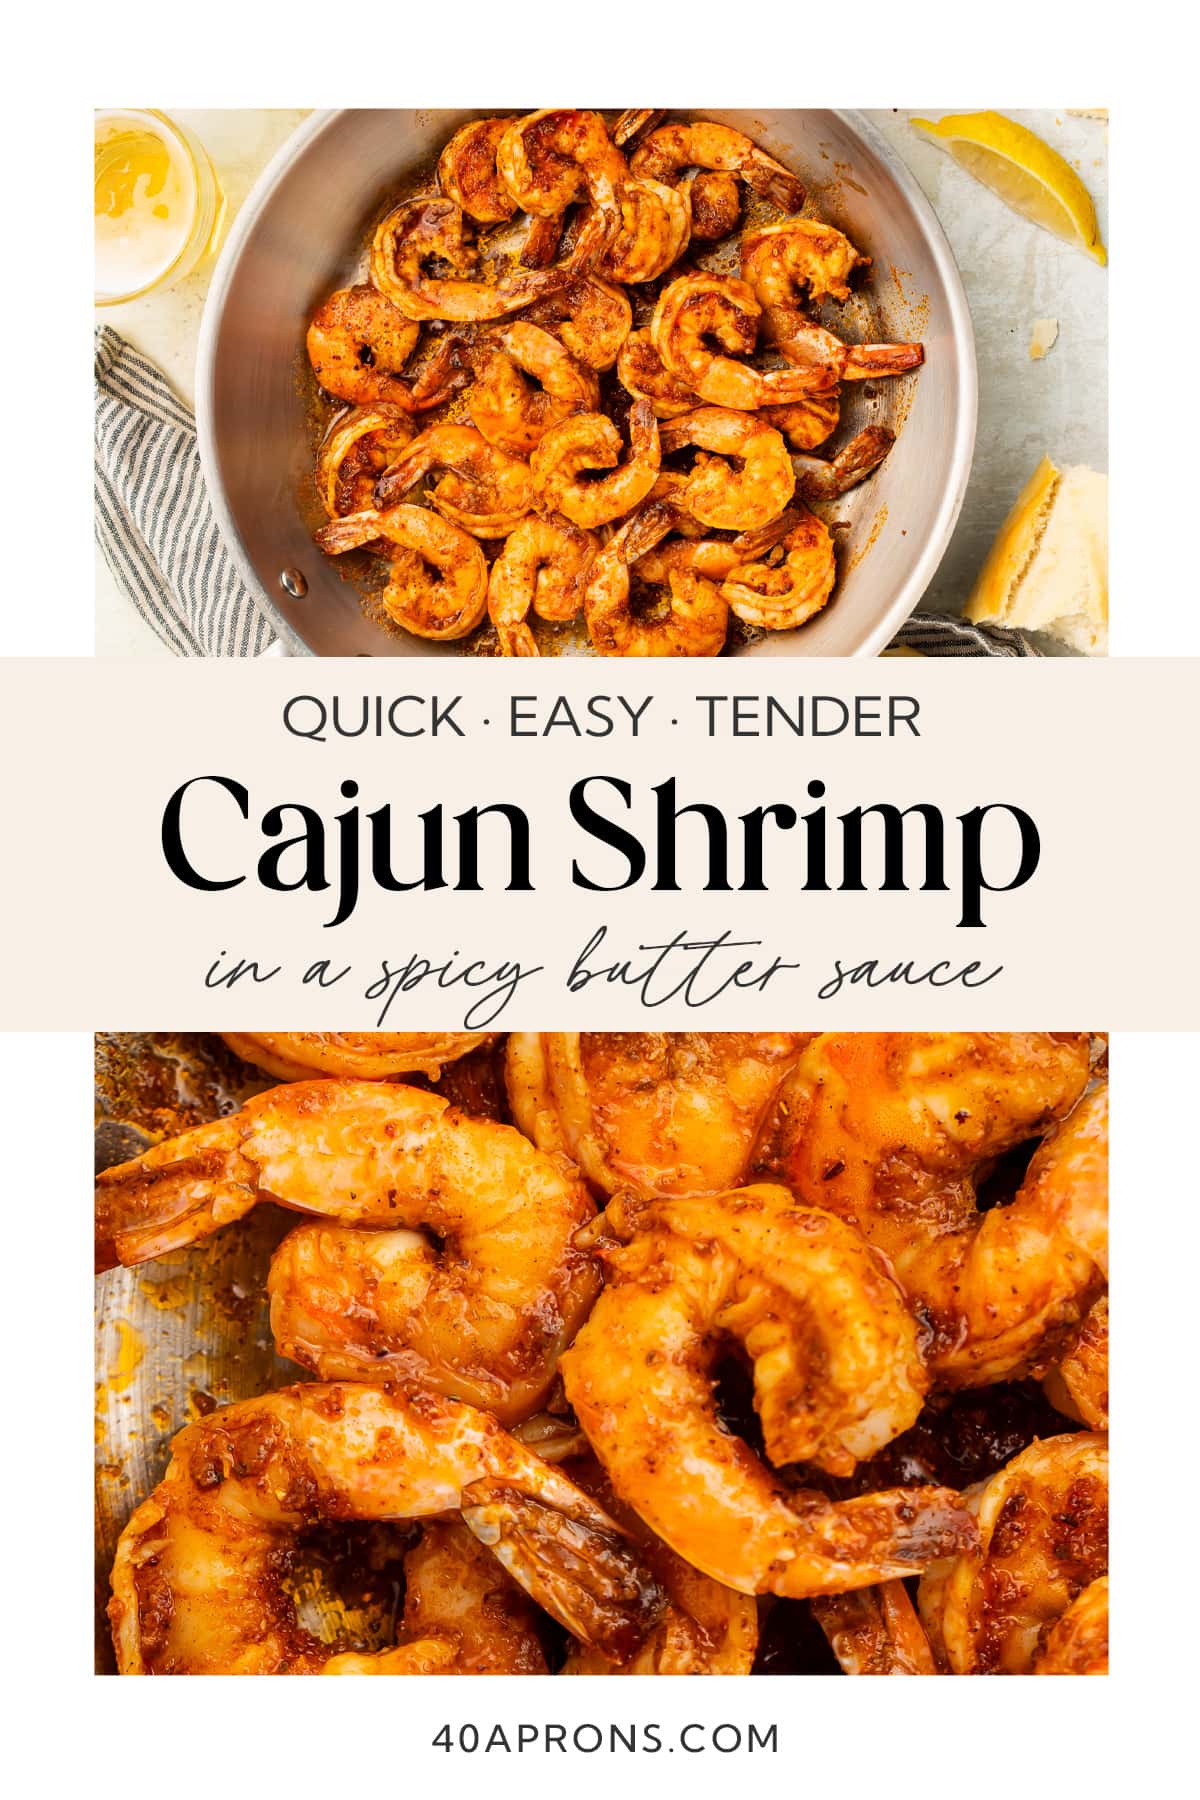 Pin graphic for Cajun shrimp.